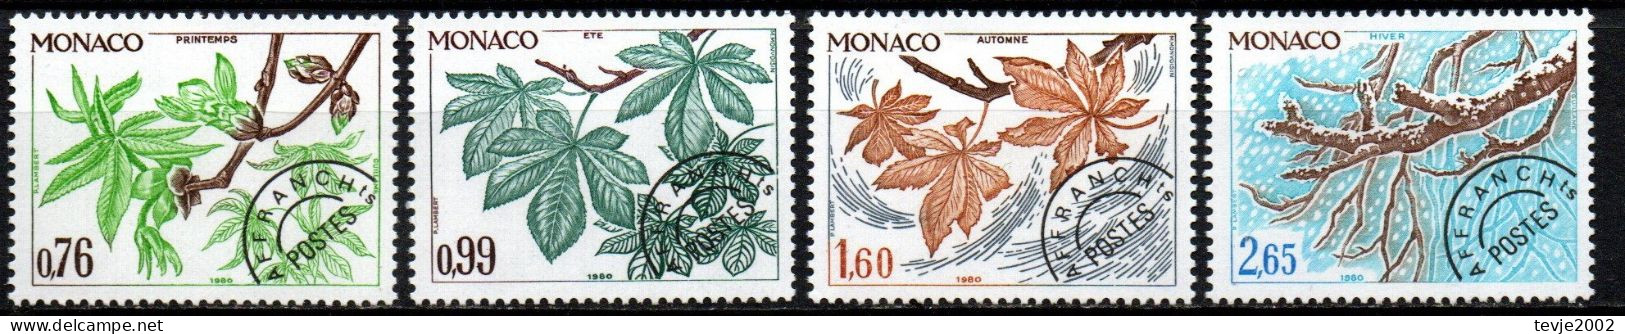 Monaco 1980 - Mi.Nr. 1410 - 1413 - Postfrisch MNH - Bäume Trees Kastanie - Trees